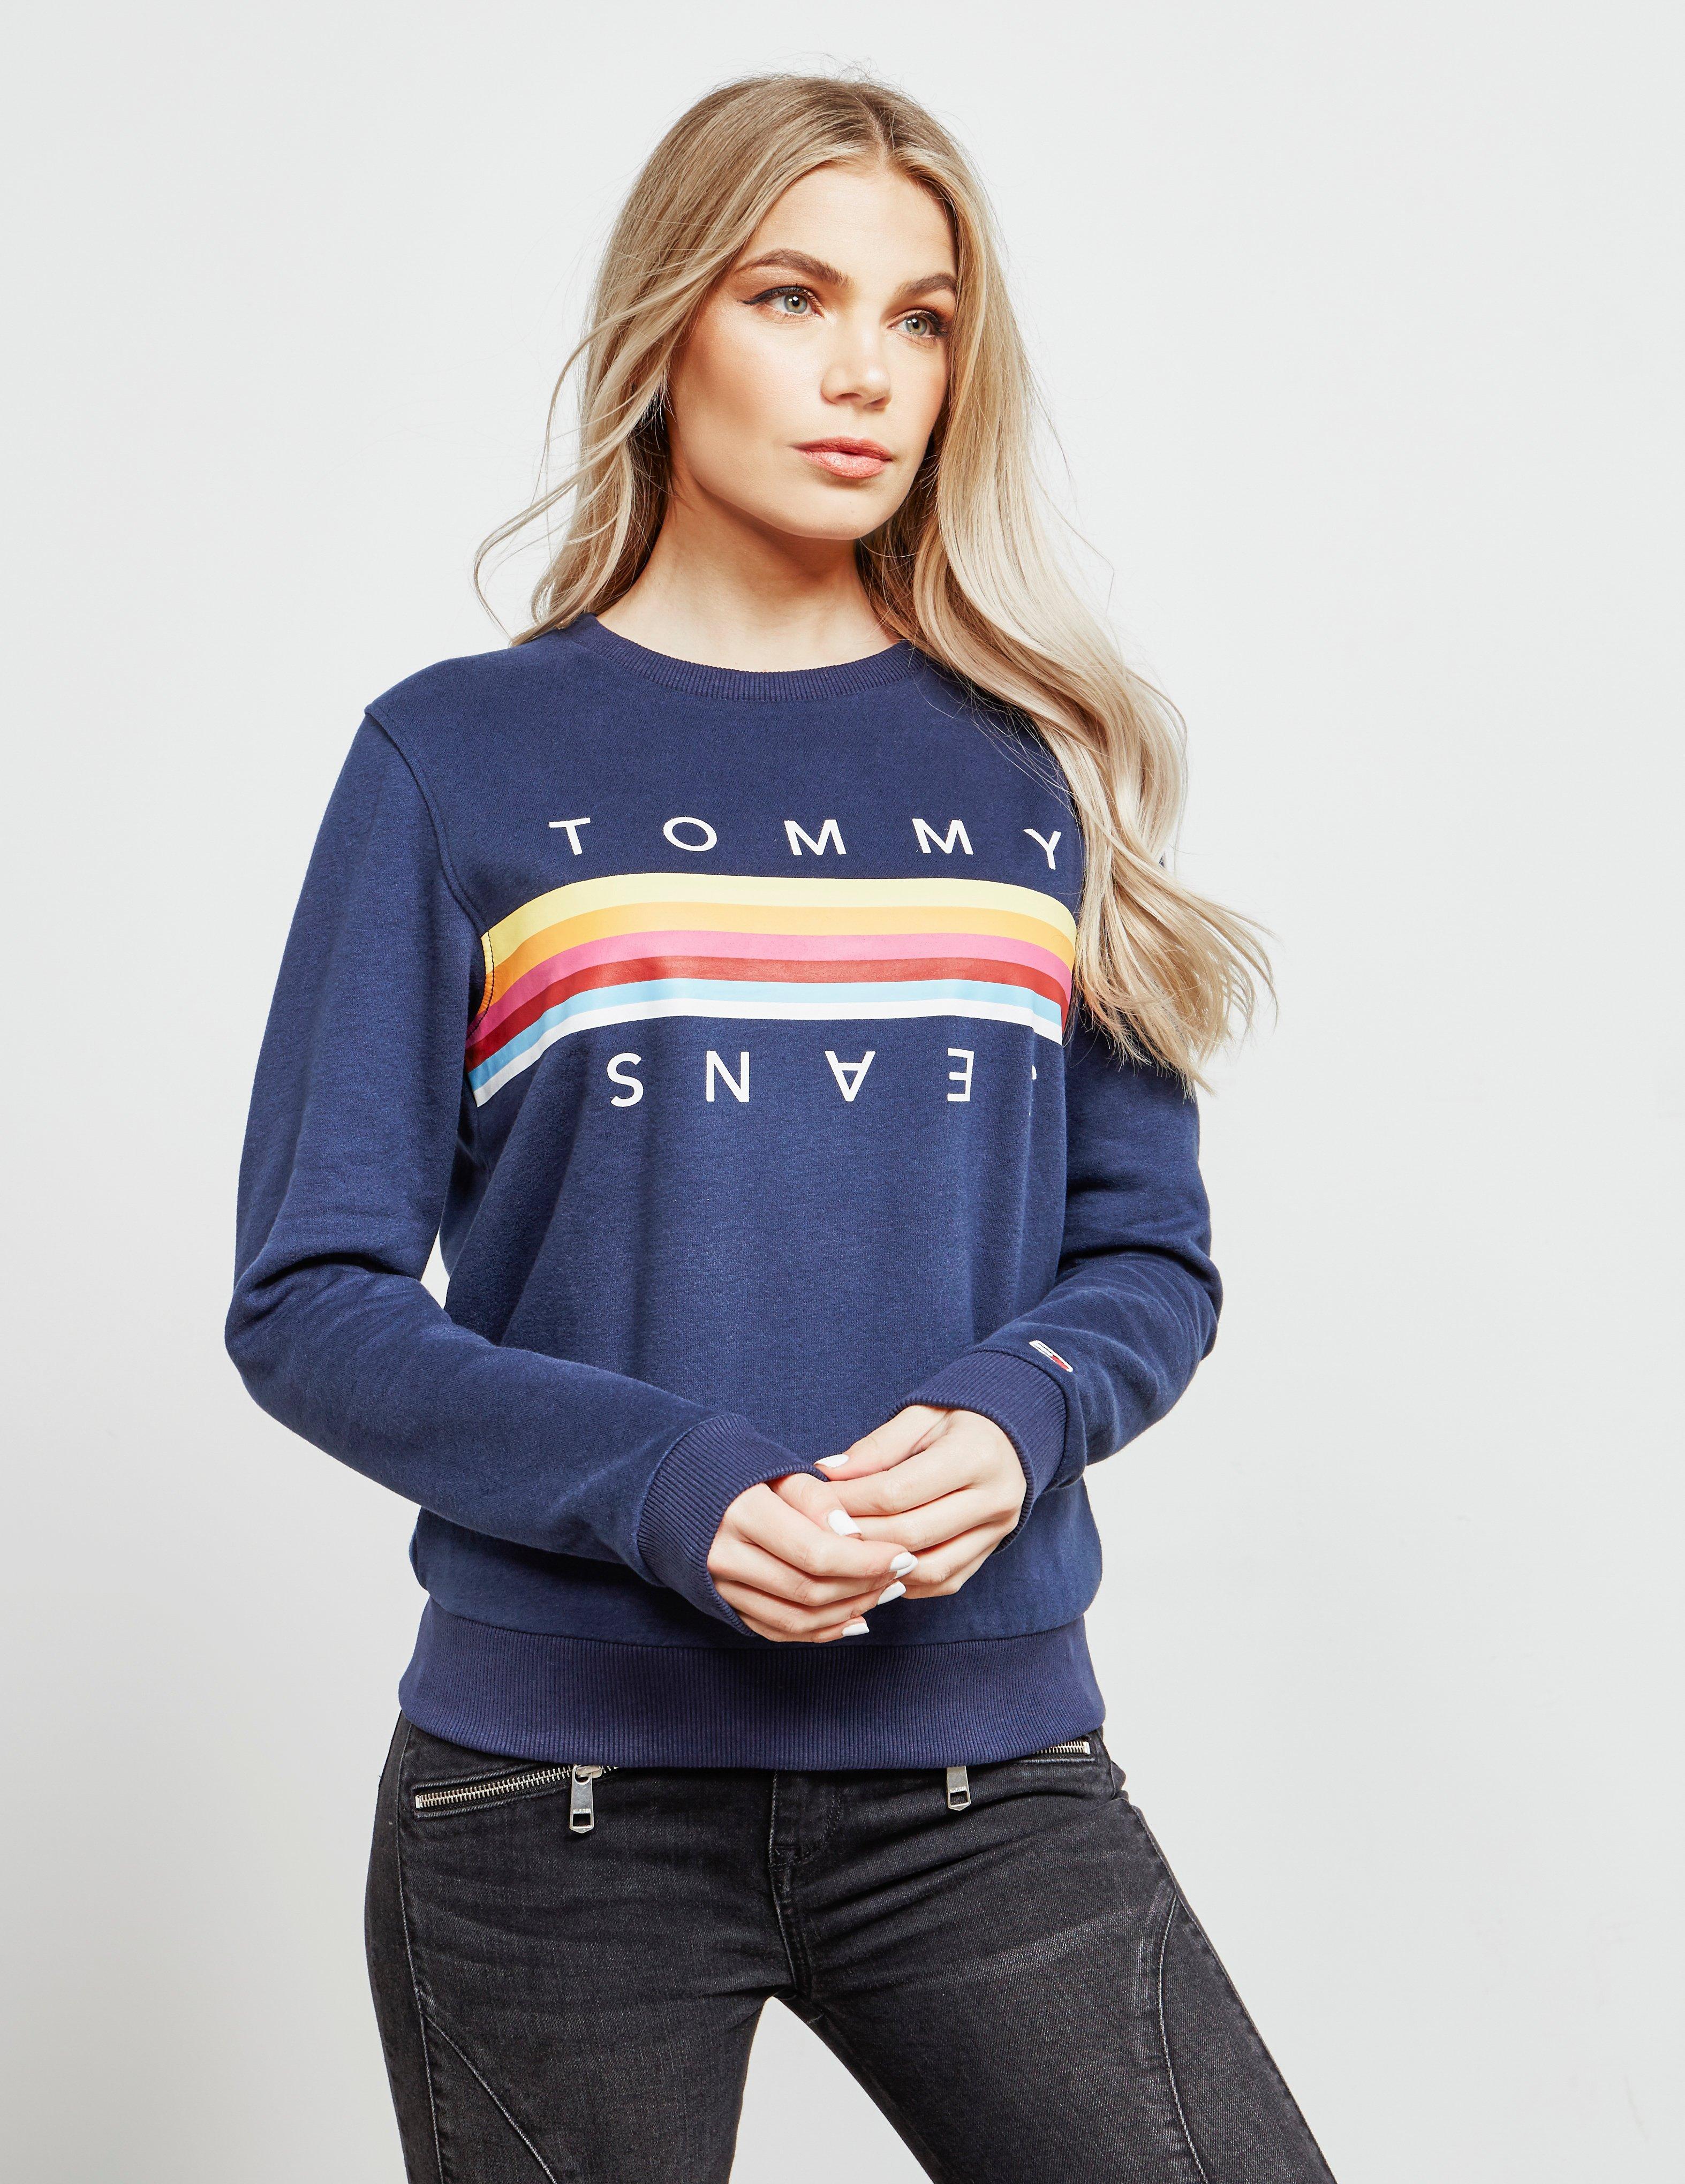 Tommy Hilfiger Rainbow Sweatshirt Navy Blue | Lyst